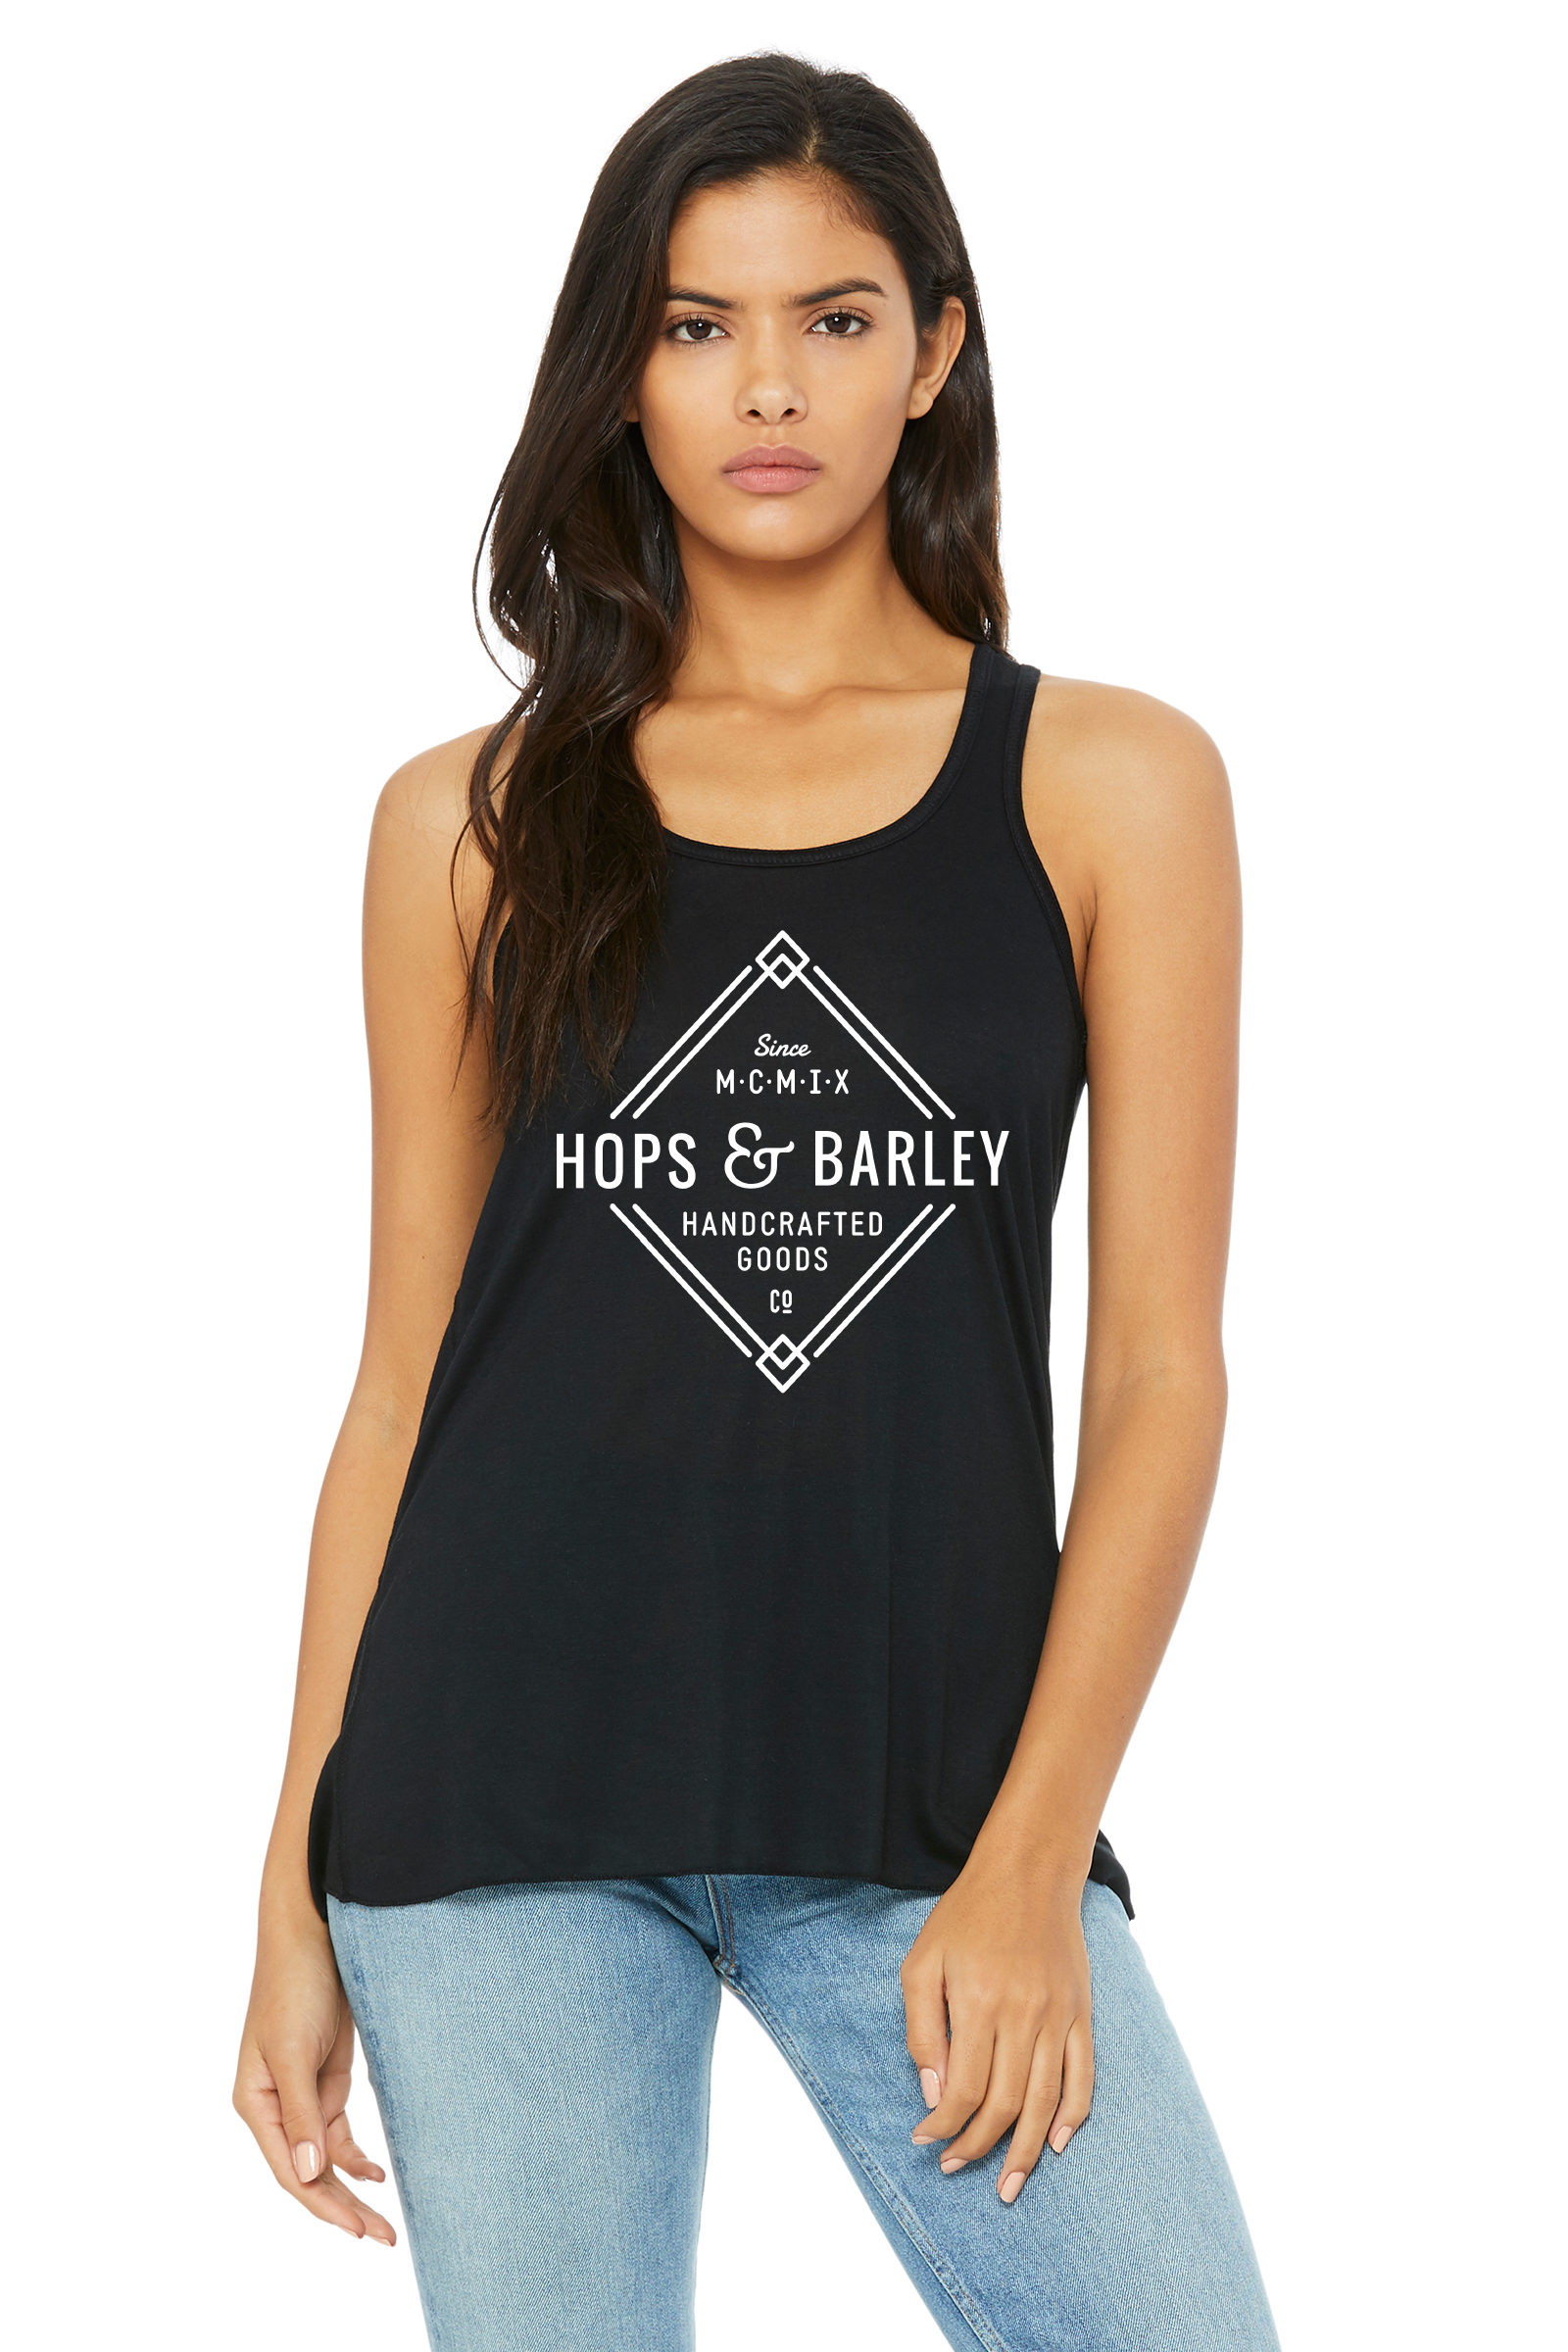 Hops & Barley Handcrafted Goods Tank Top | Hops & Barley Co.